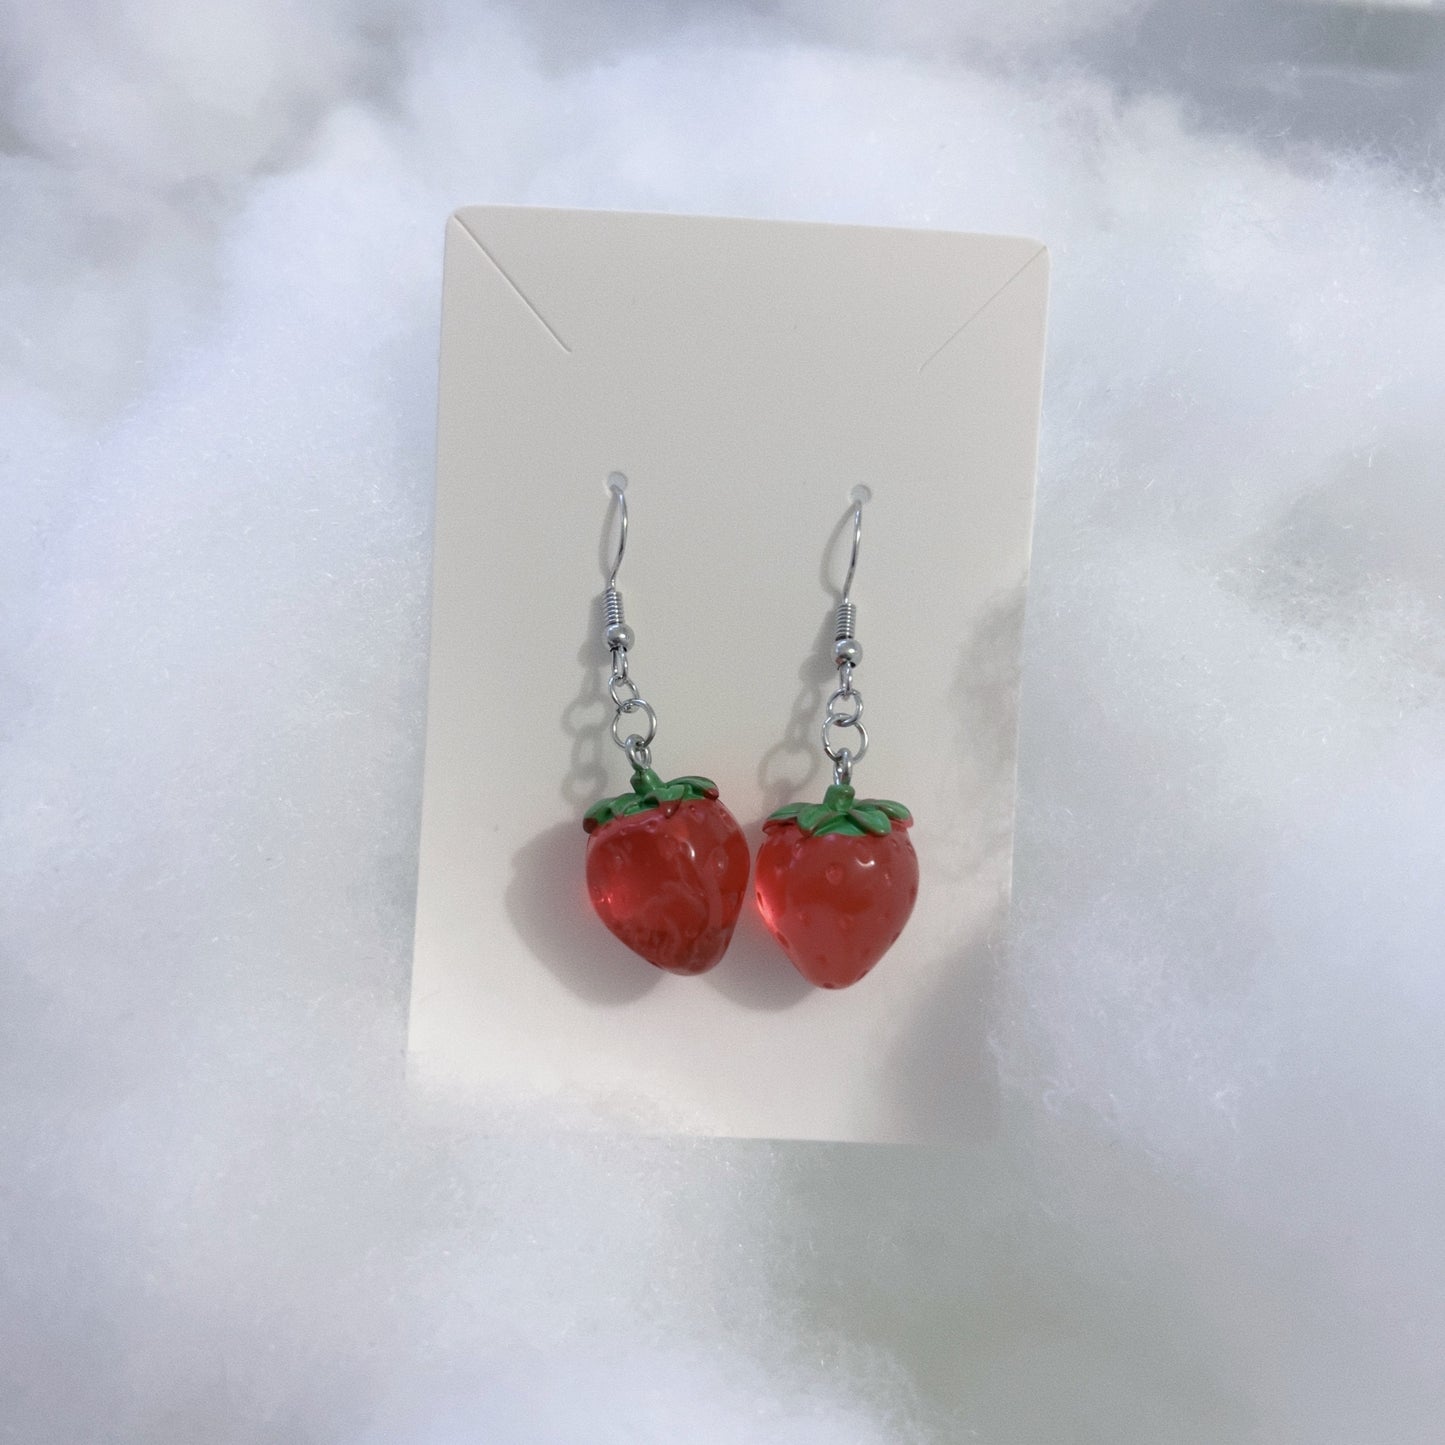 Big strawberry earrings.